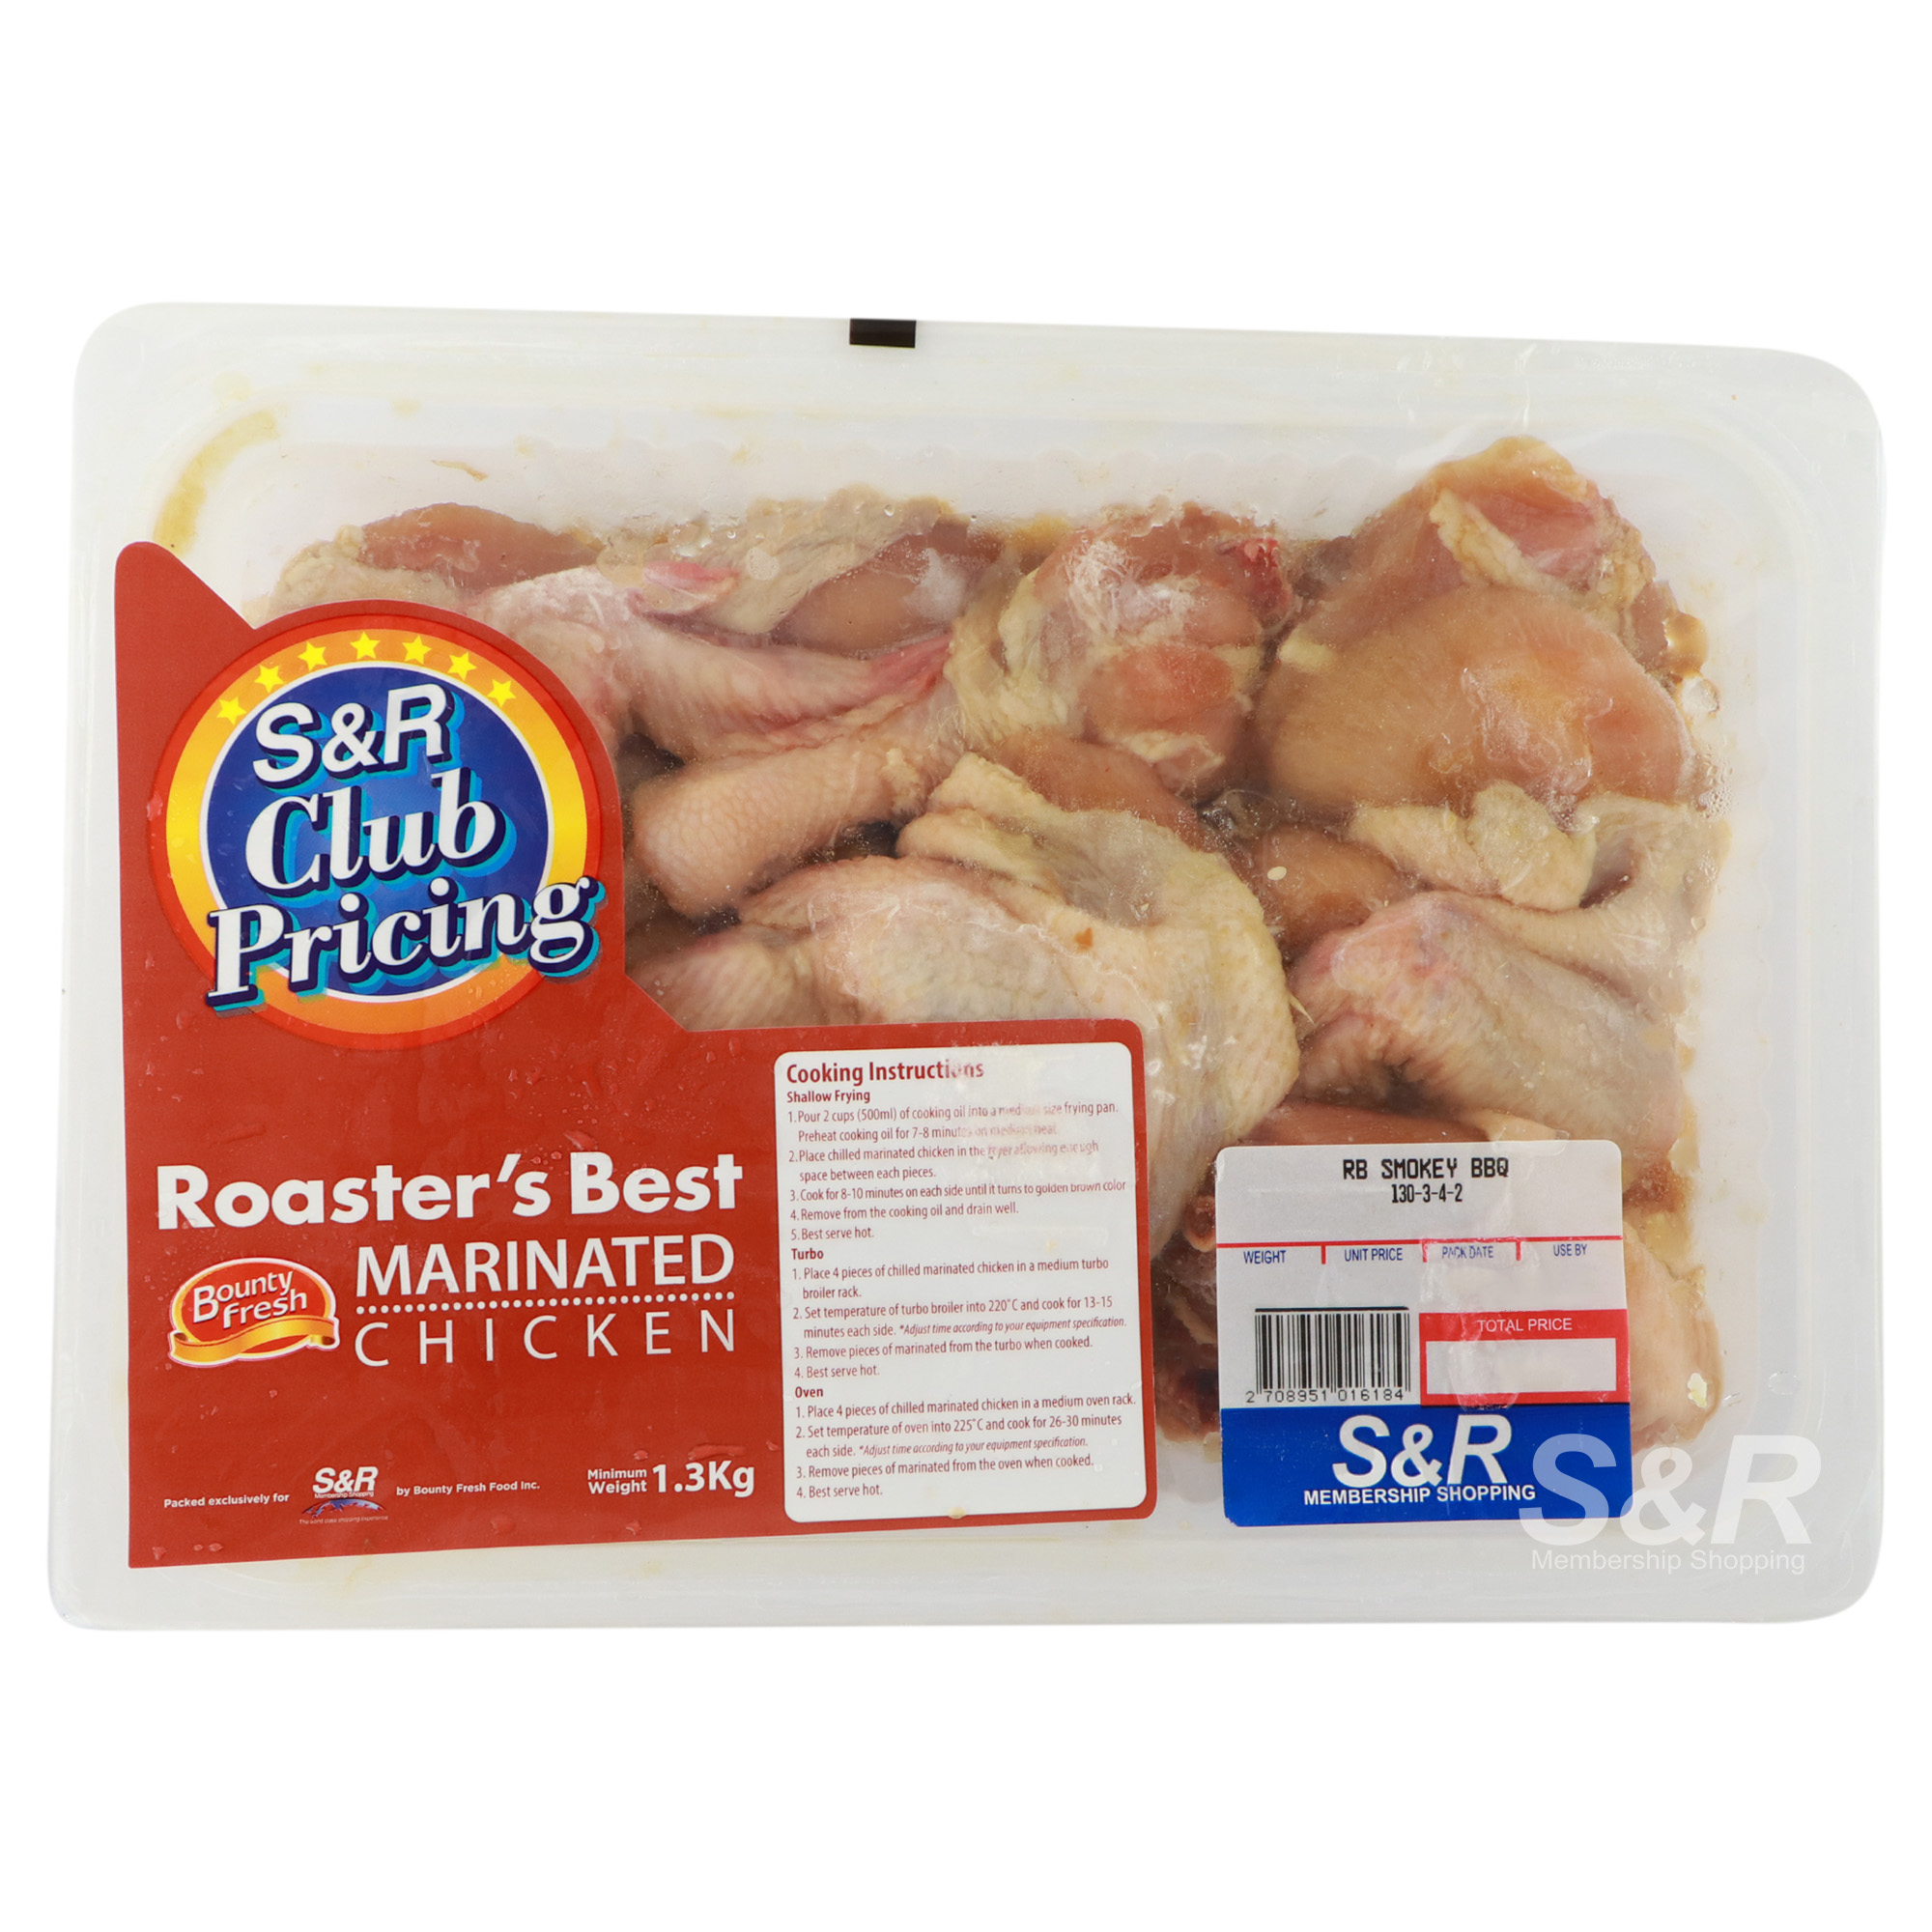 Roaster's Best Marinated Smokey BBQ Chicken Cut-ups approx. 2kg